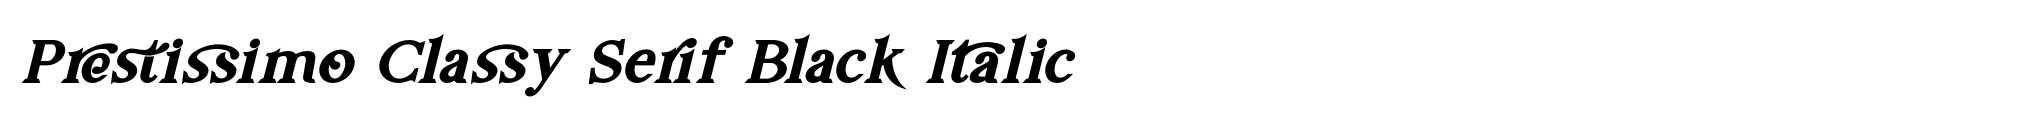 Prestissimo Classy Serif Black Italic image